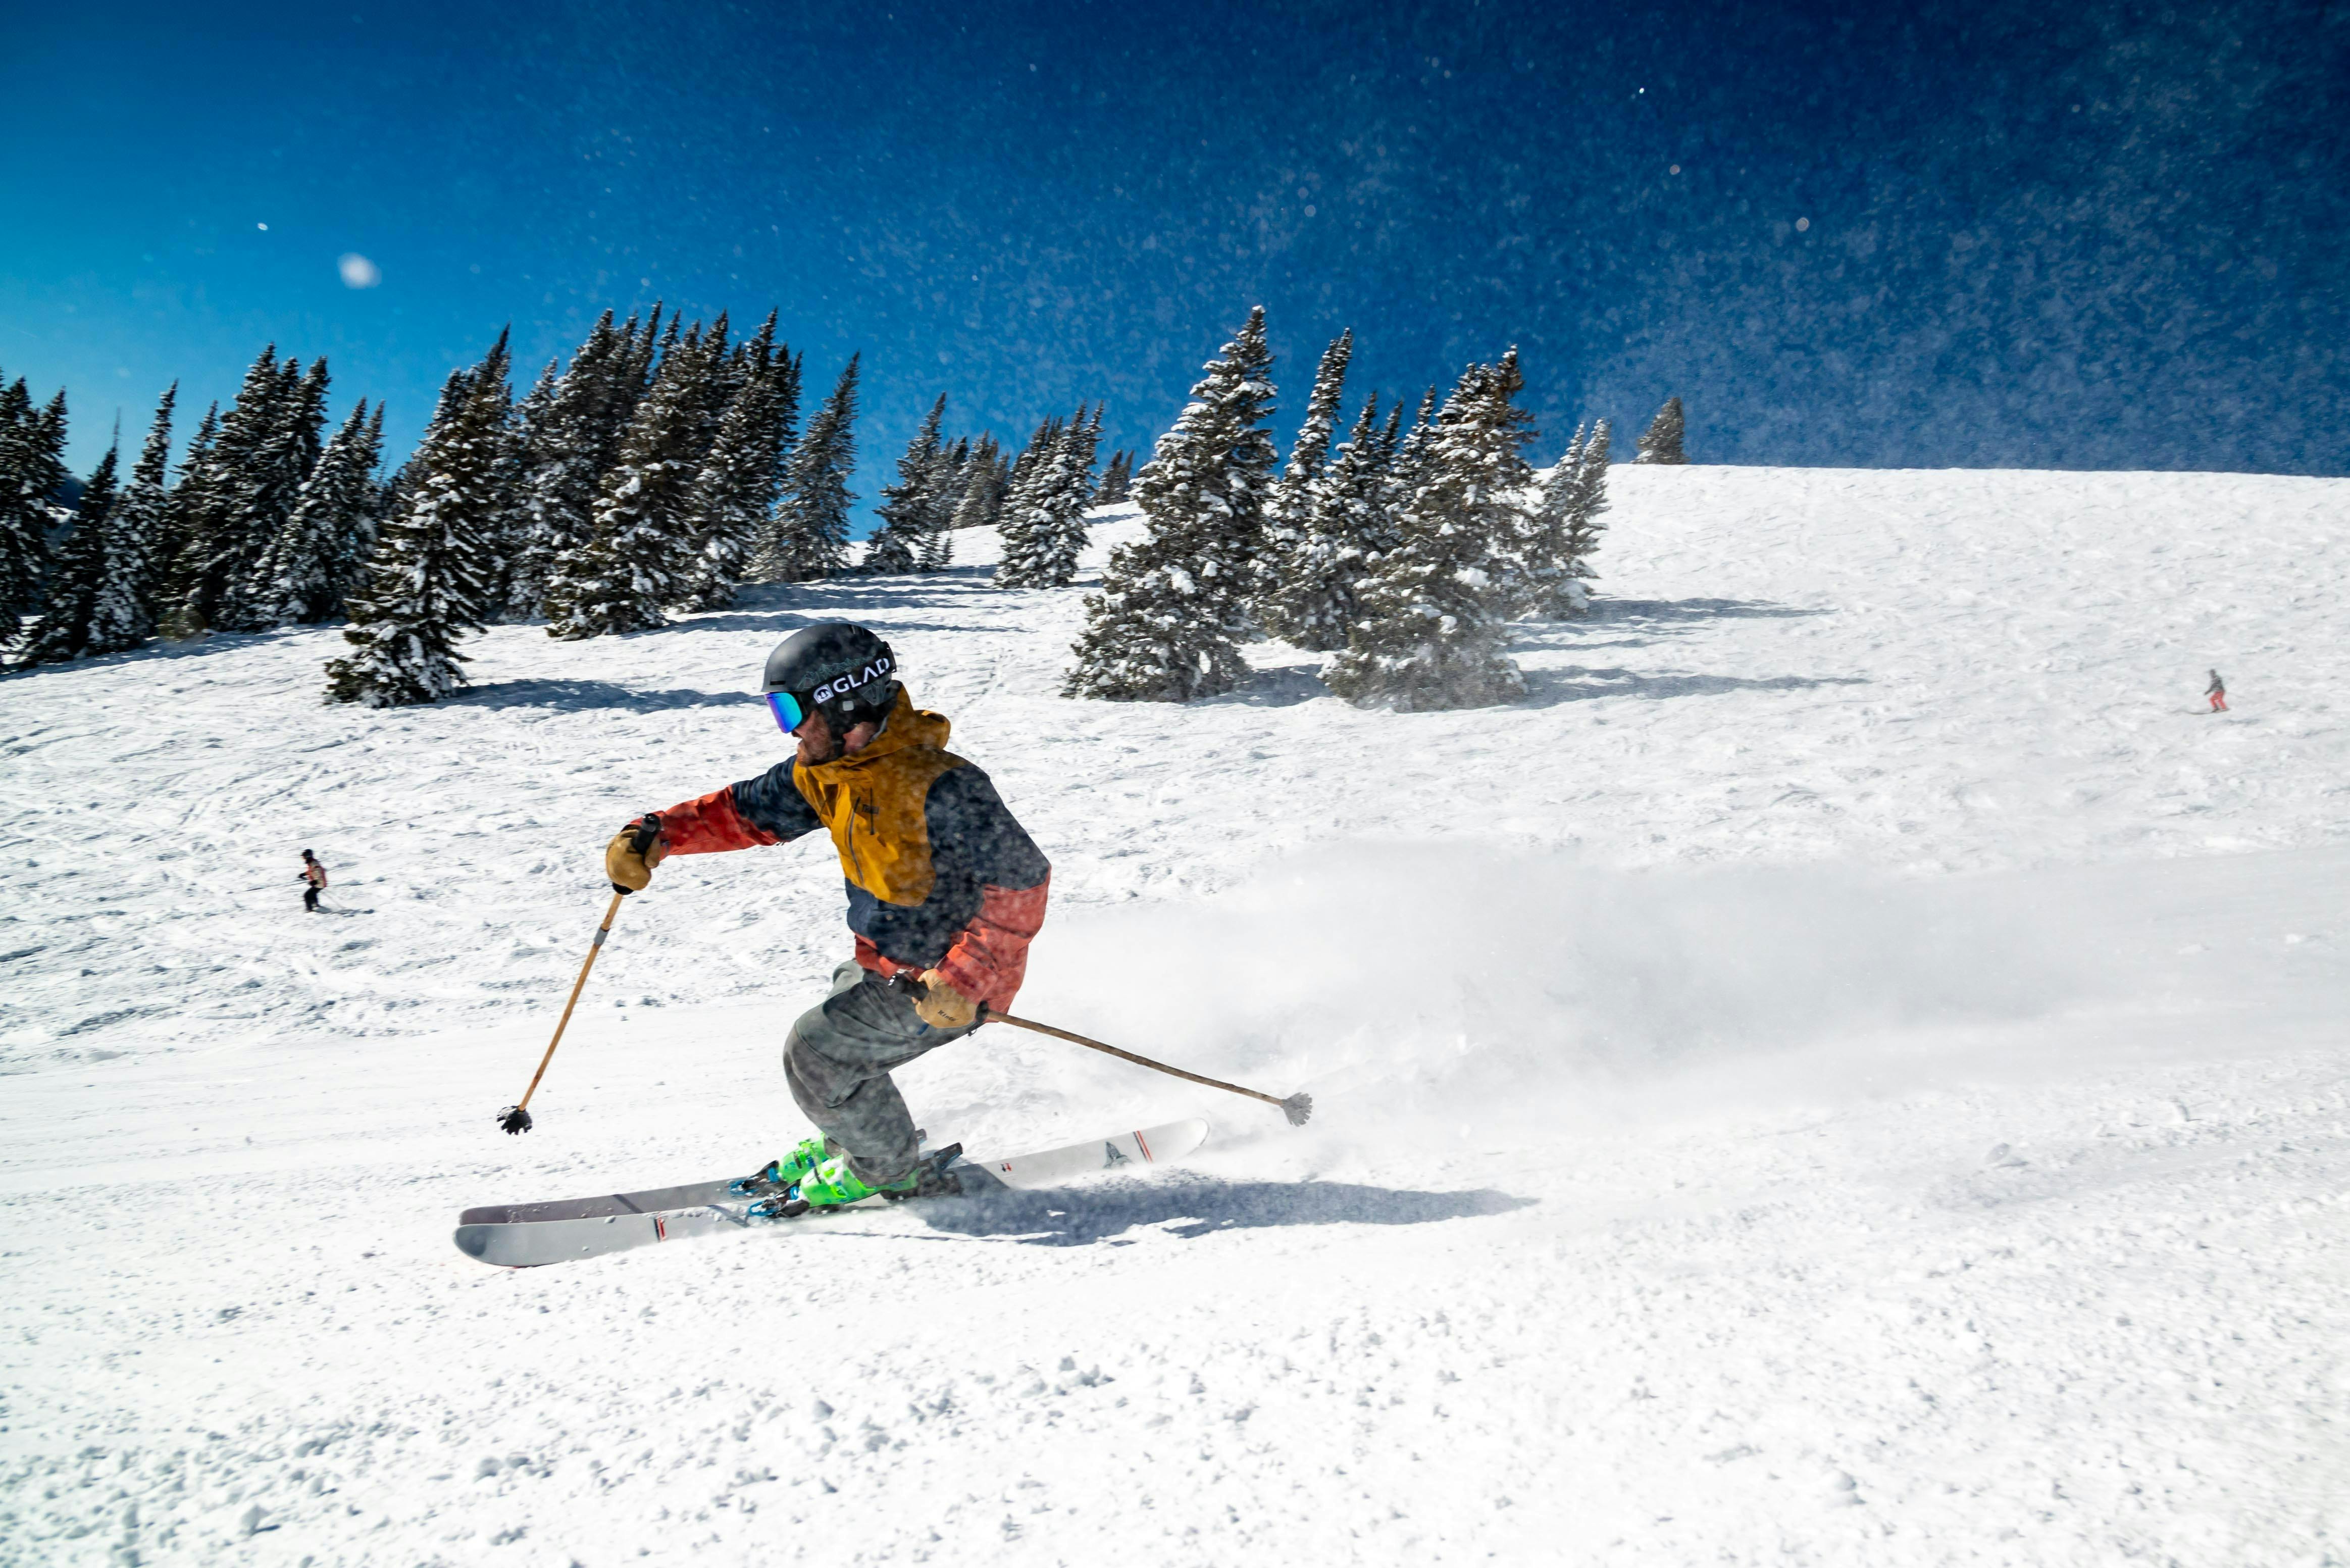 A skier in an orange jacket turns down a ski run. 